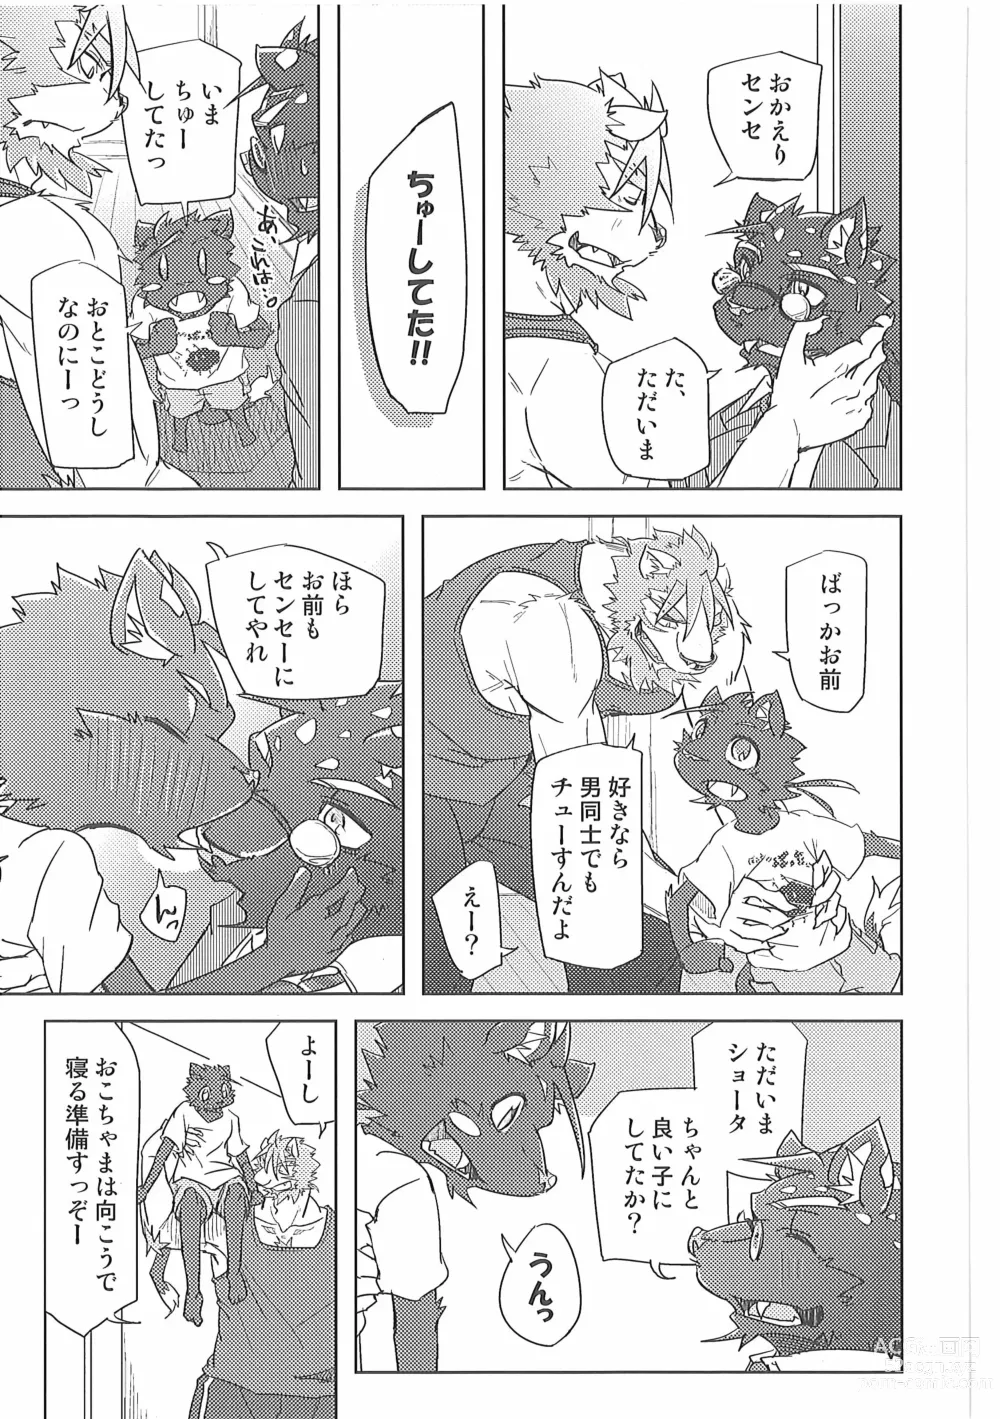 Page 10 of doujinshi Crazy Waltz